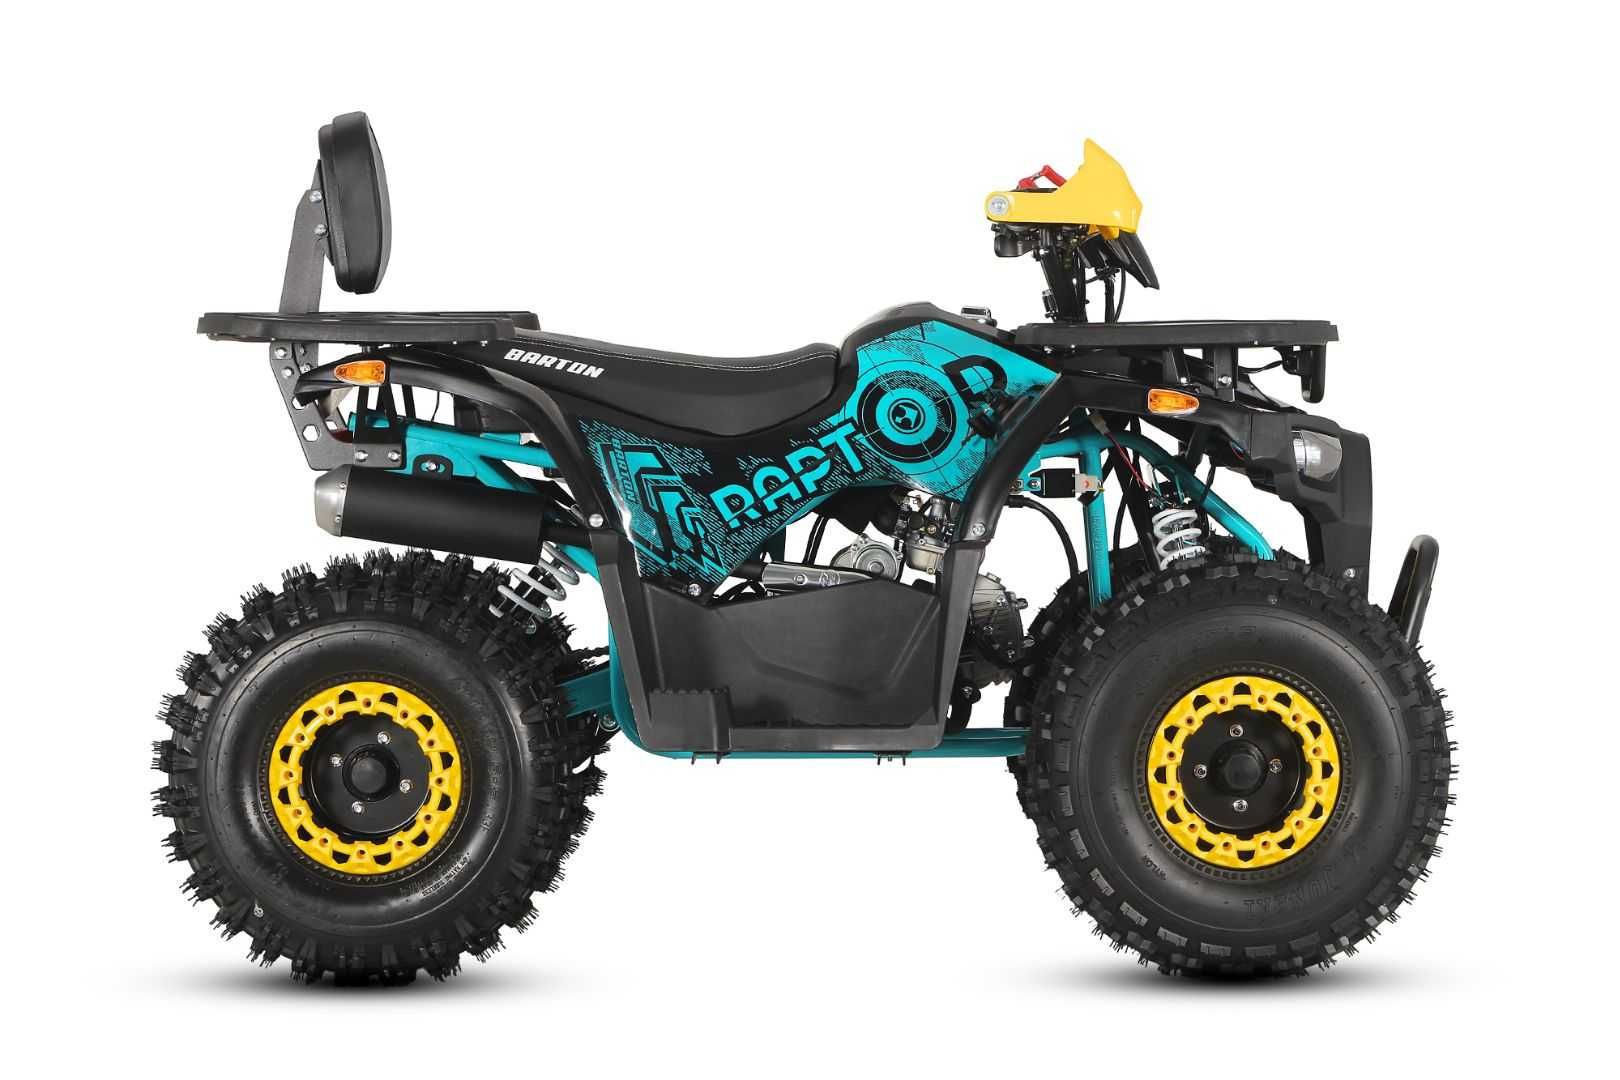 Quad 125 ATV Barton Raptor LED Hak Pług Raty Kxd Dowóz